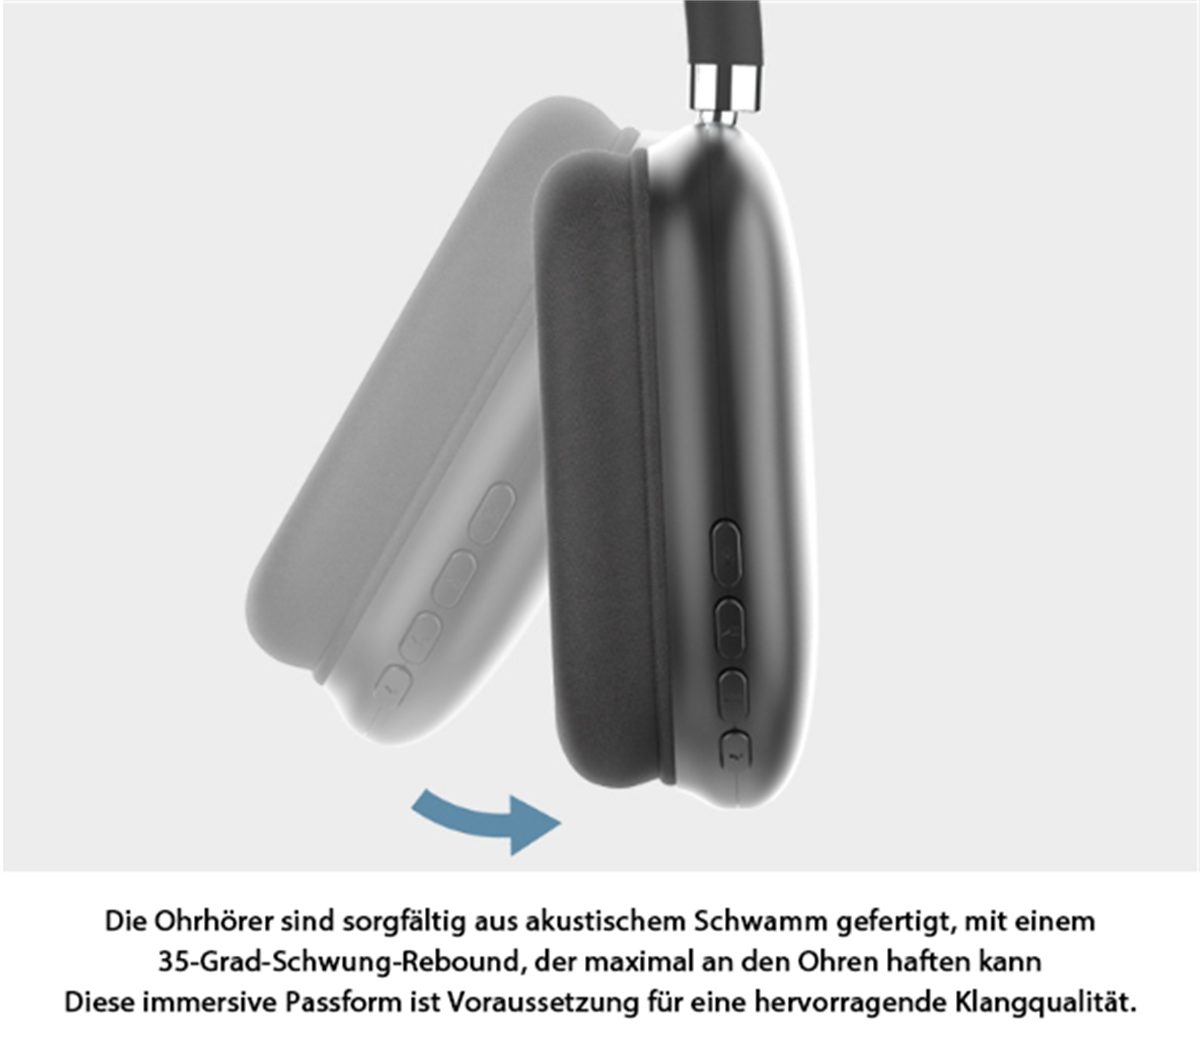 Akkulaufzeit Stunden carefully 12 Gaming-Headset Bluetooth-Headset, Kopfhörer mit Mikrofon Himmelblau selected